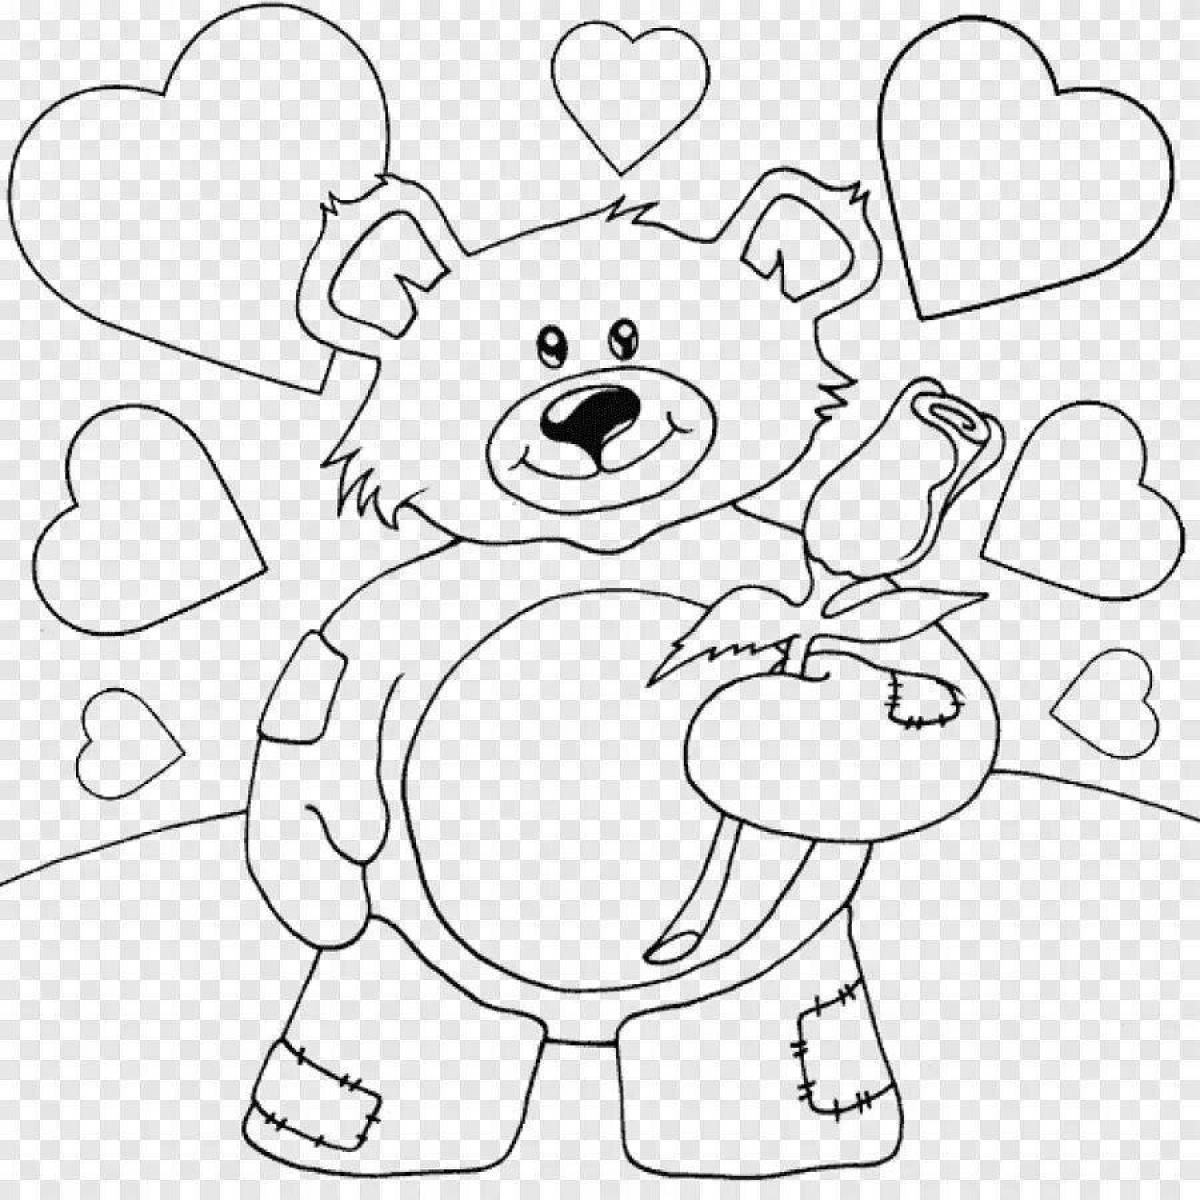 Colouring friendly teddy bear with a heart